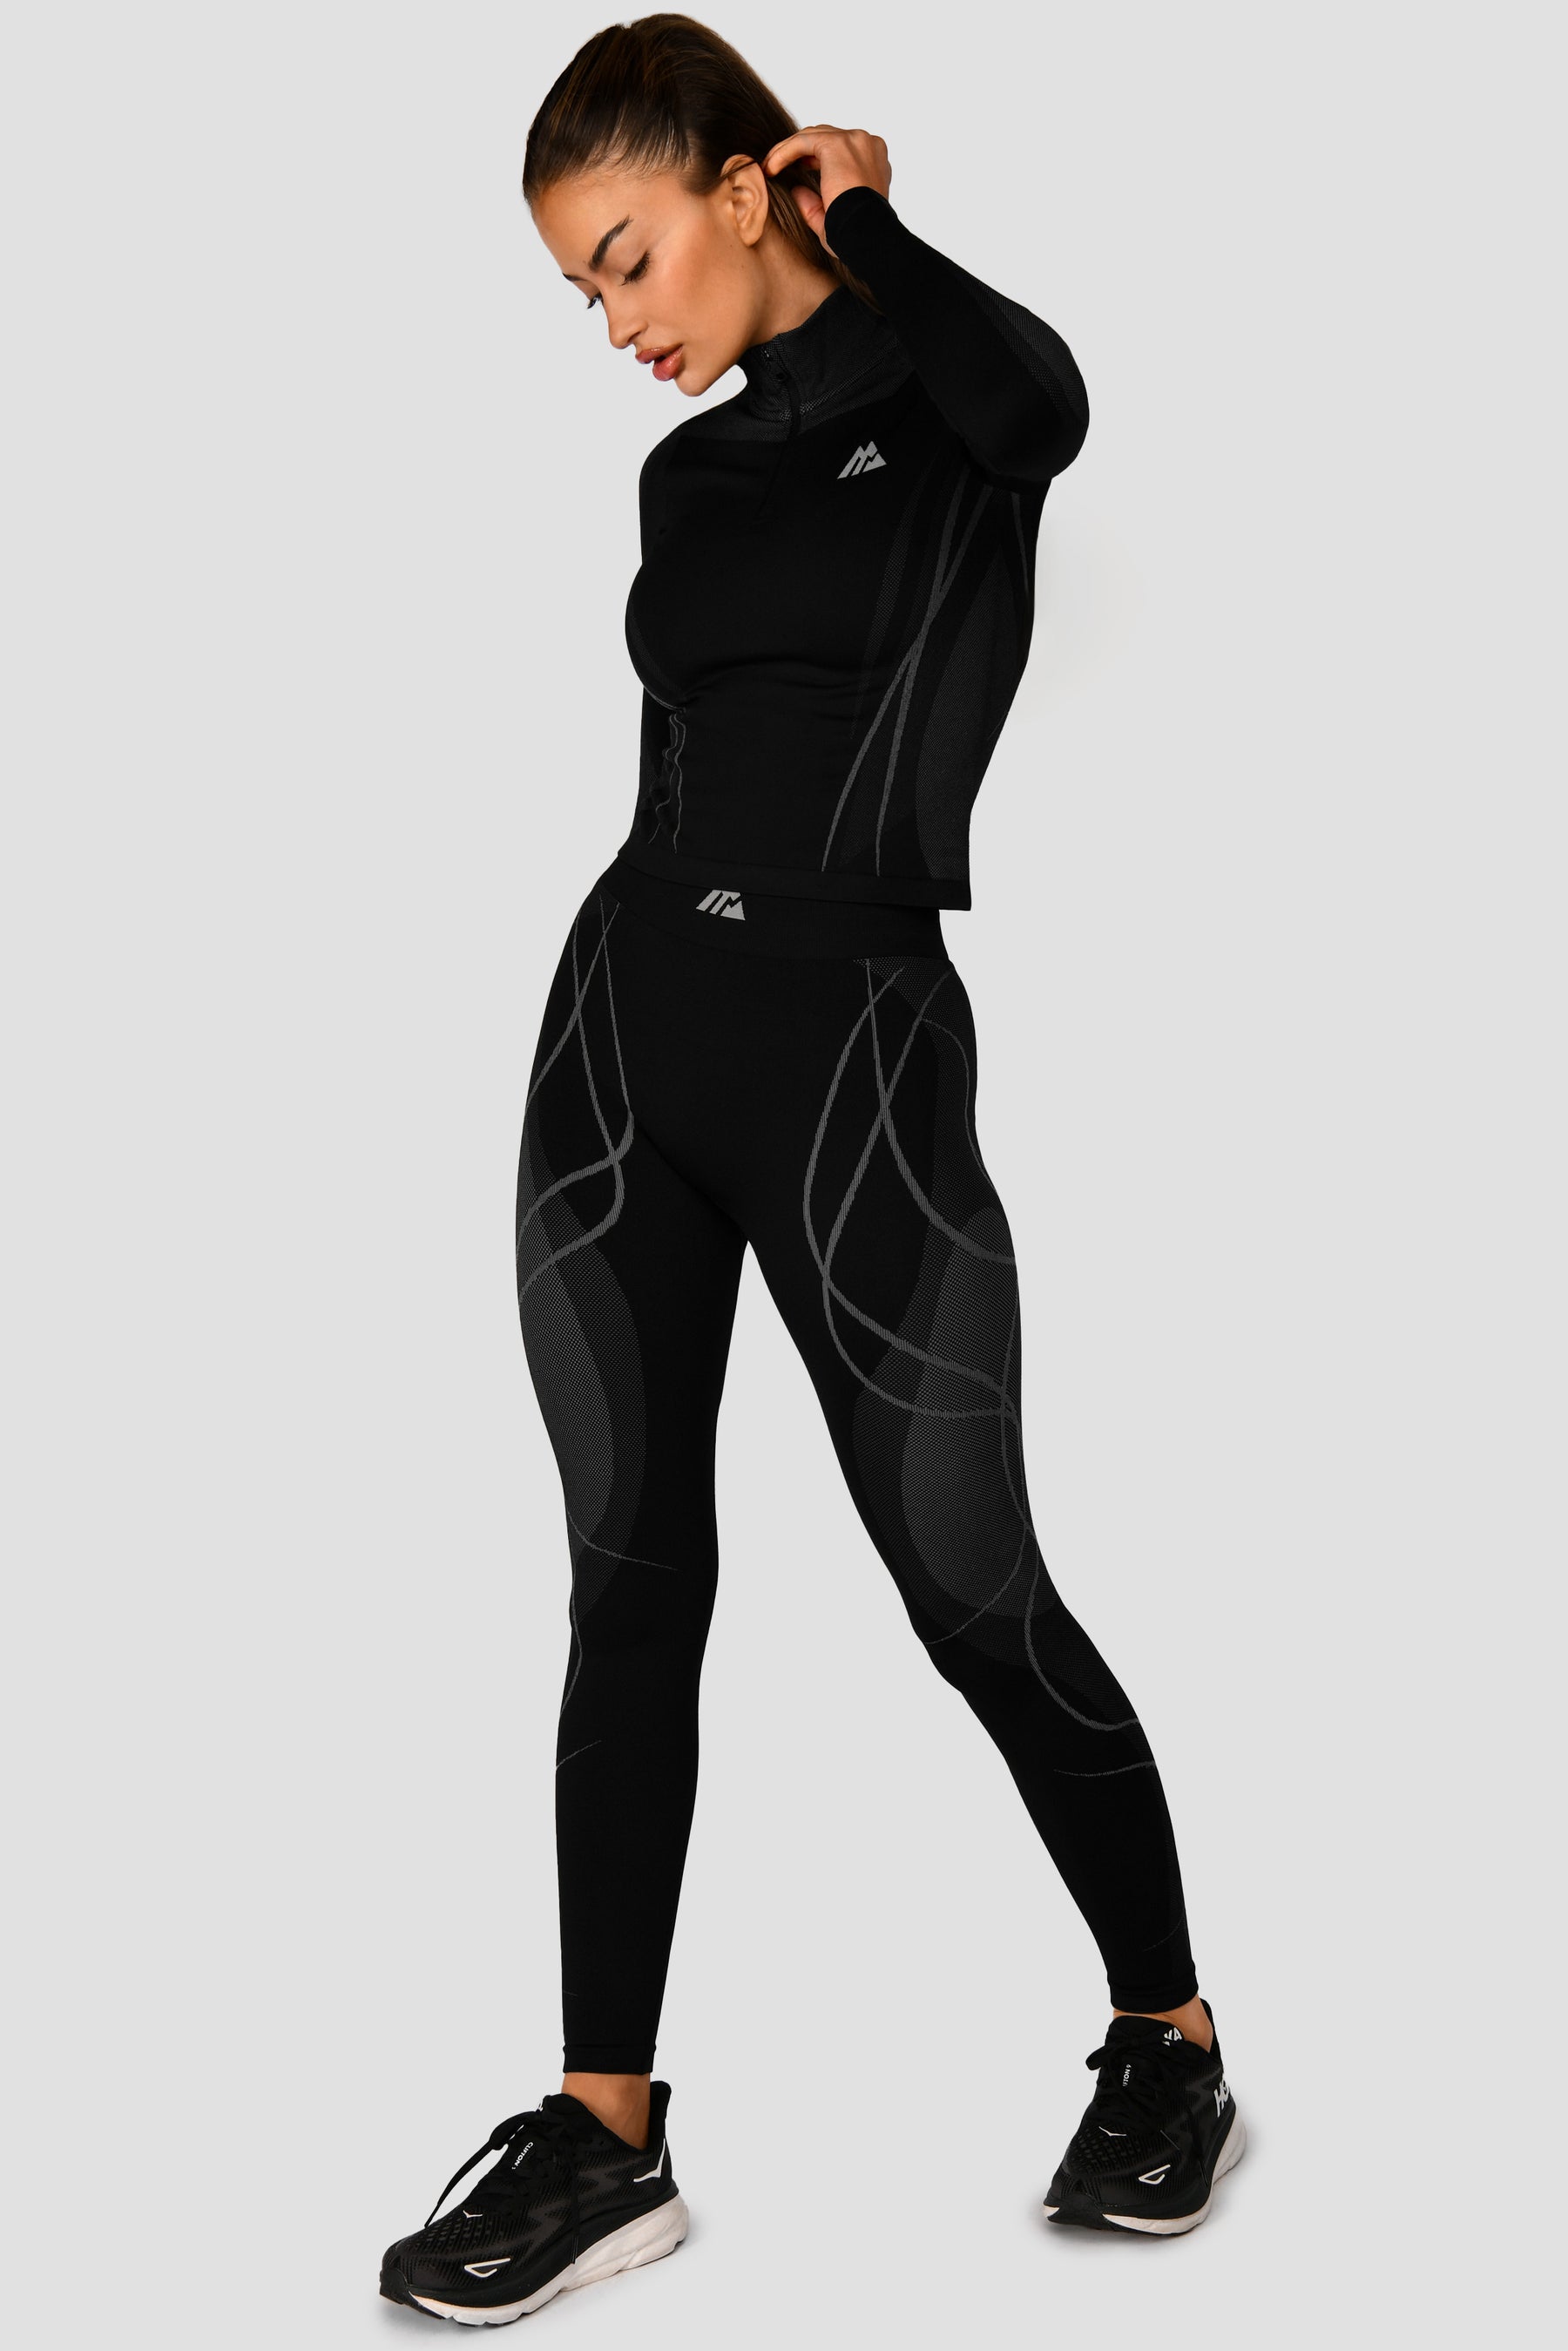 Women's Contour Seamless Legging - Black/Platinum Grey